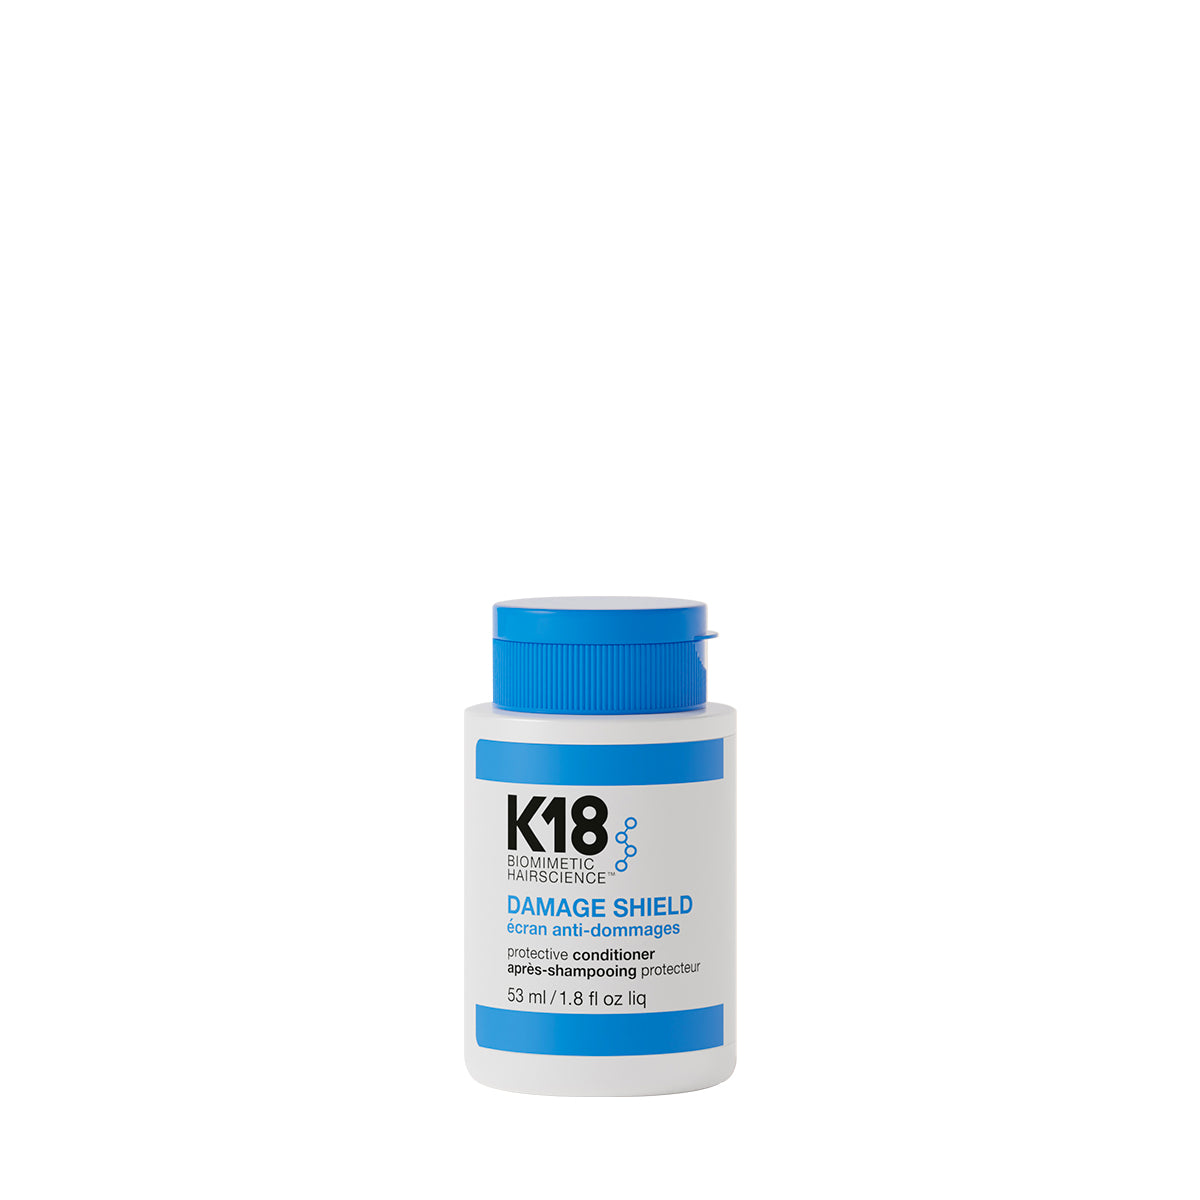 K18 DAMAGE SHIELD protective conditioner 53 ml